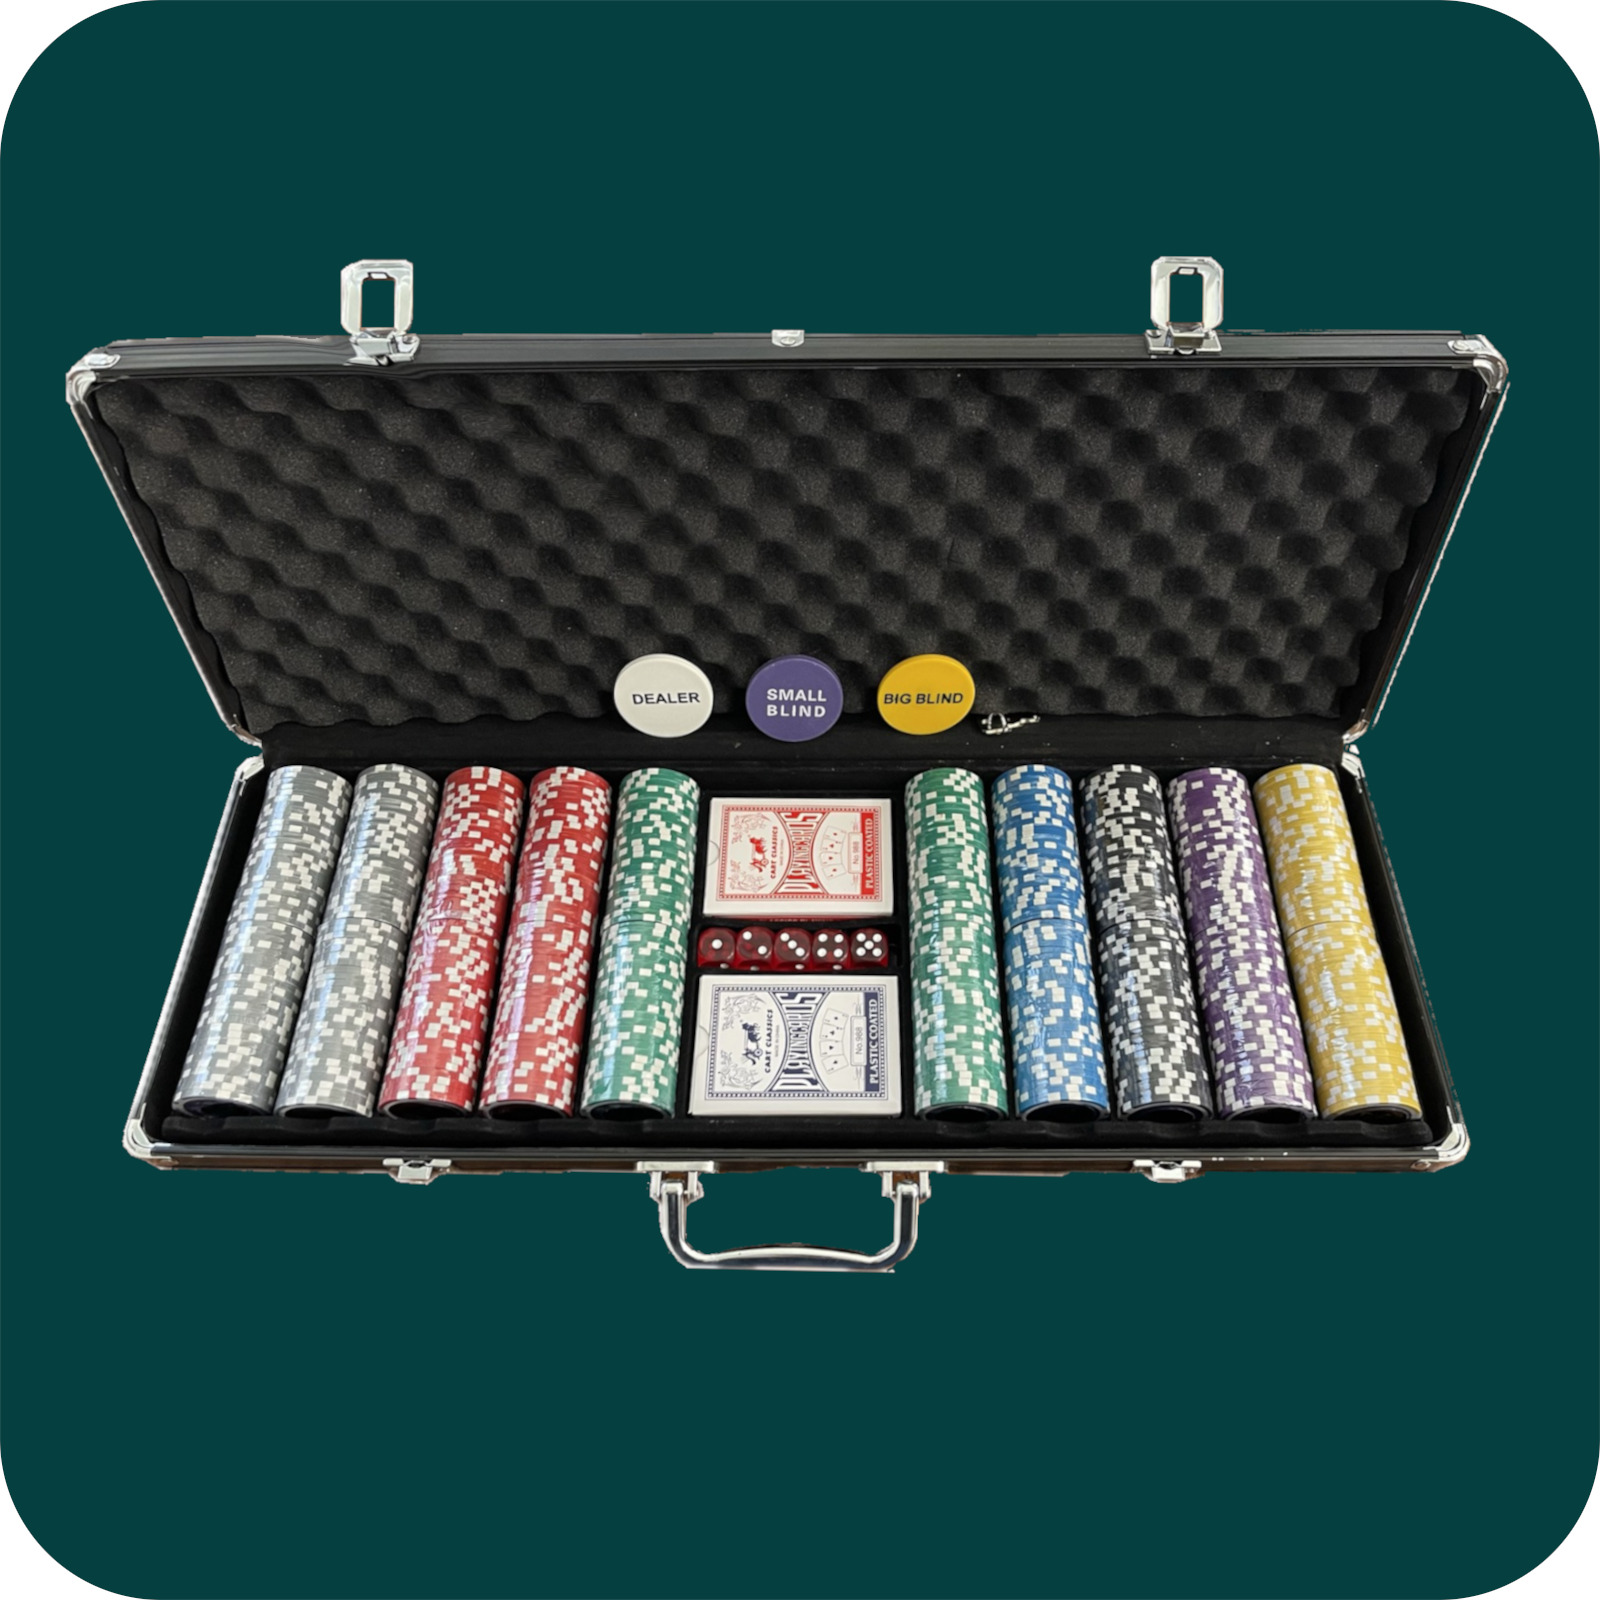 500 Pcs. Laser Poker Chip Set 13 Gram Clay Composite - Sleek Black Aluminum Case